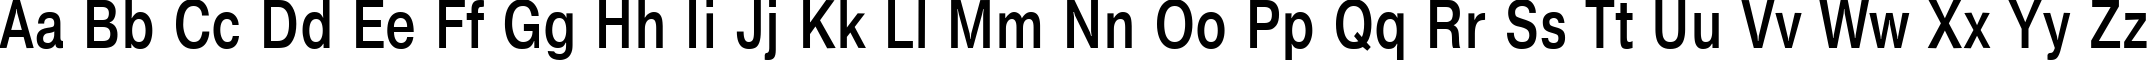 Пример написания английского алфавита шрифтом NTHarmonica Bold80b